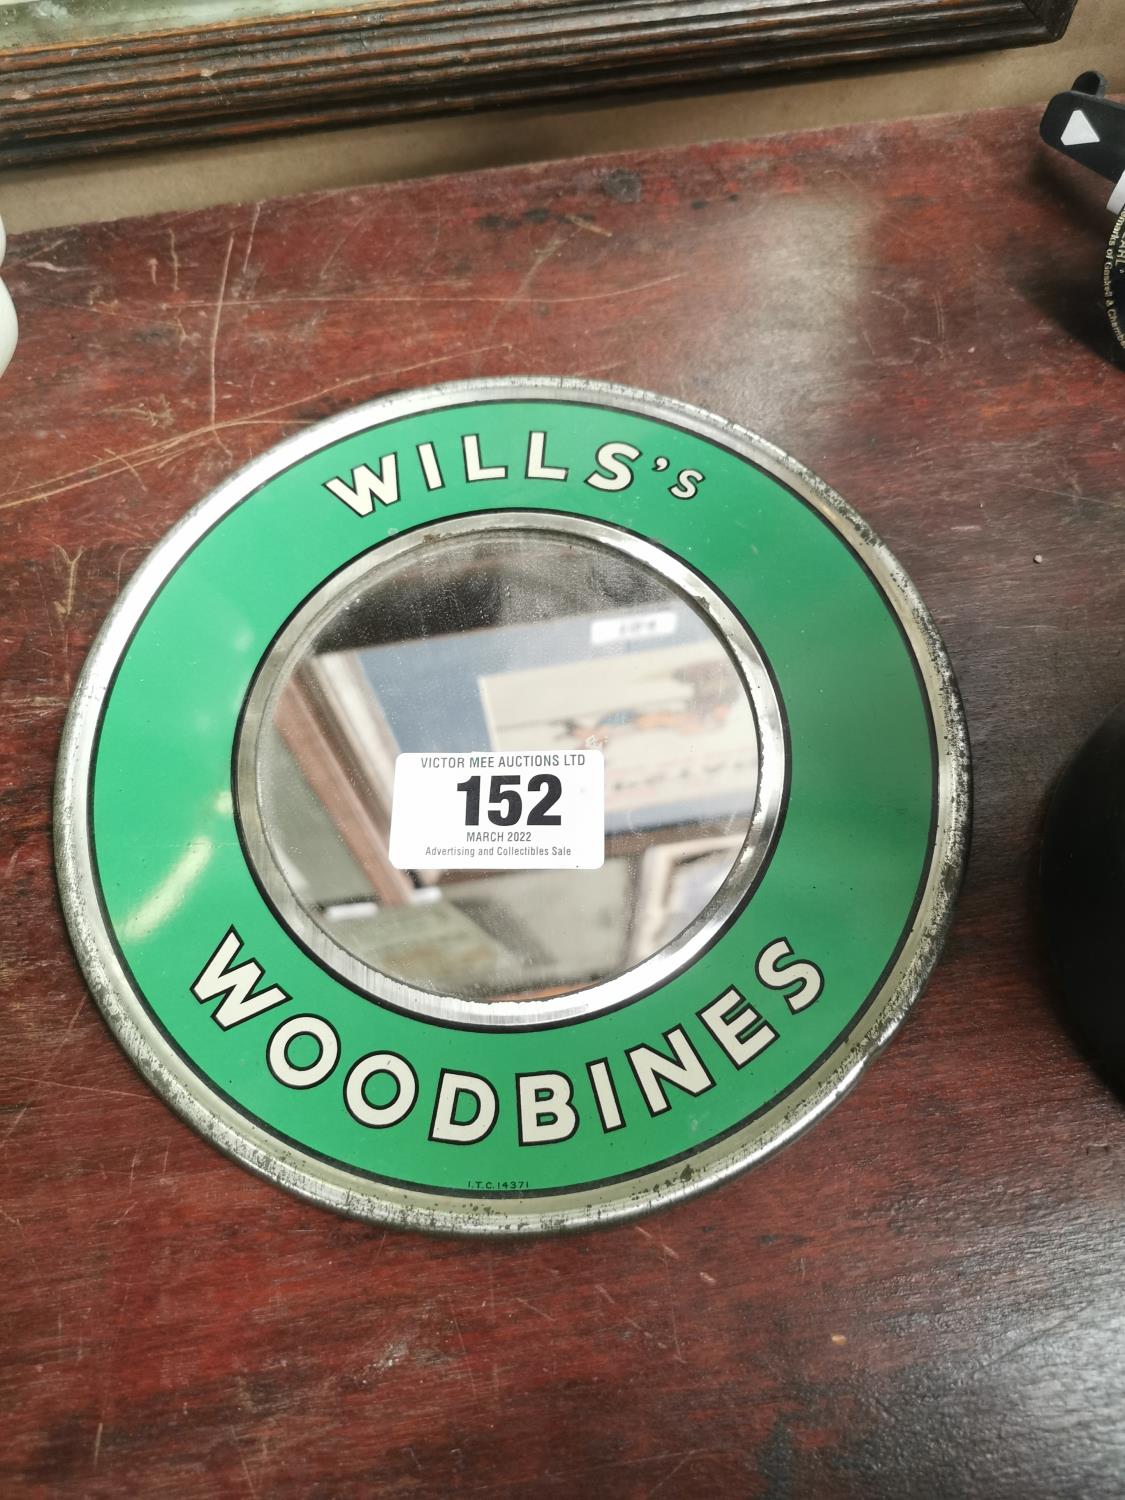 Wills Woodbine circular advertising mirror.